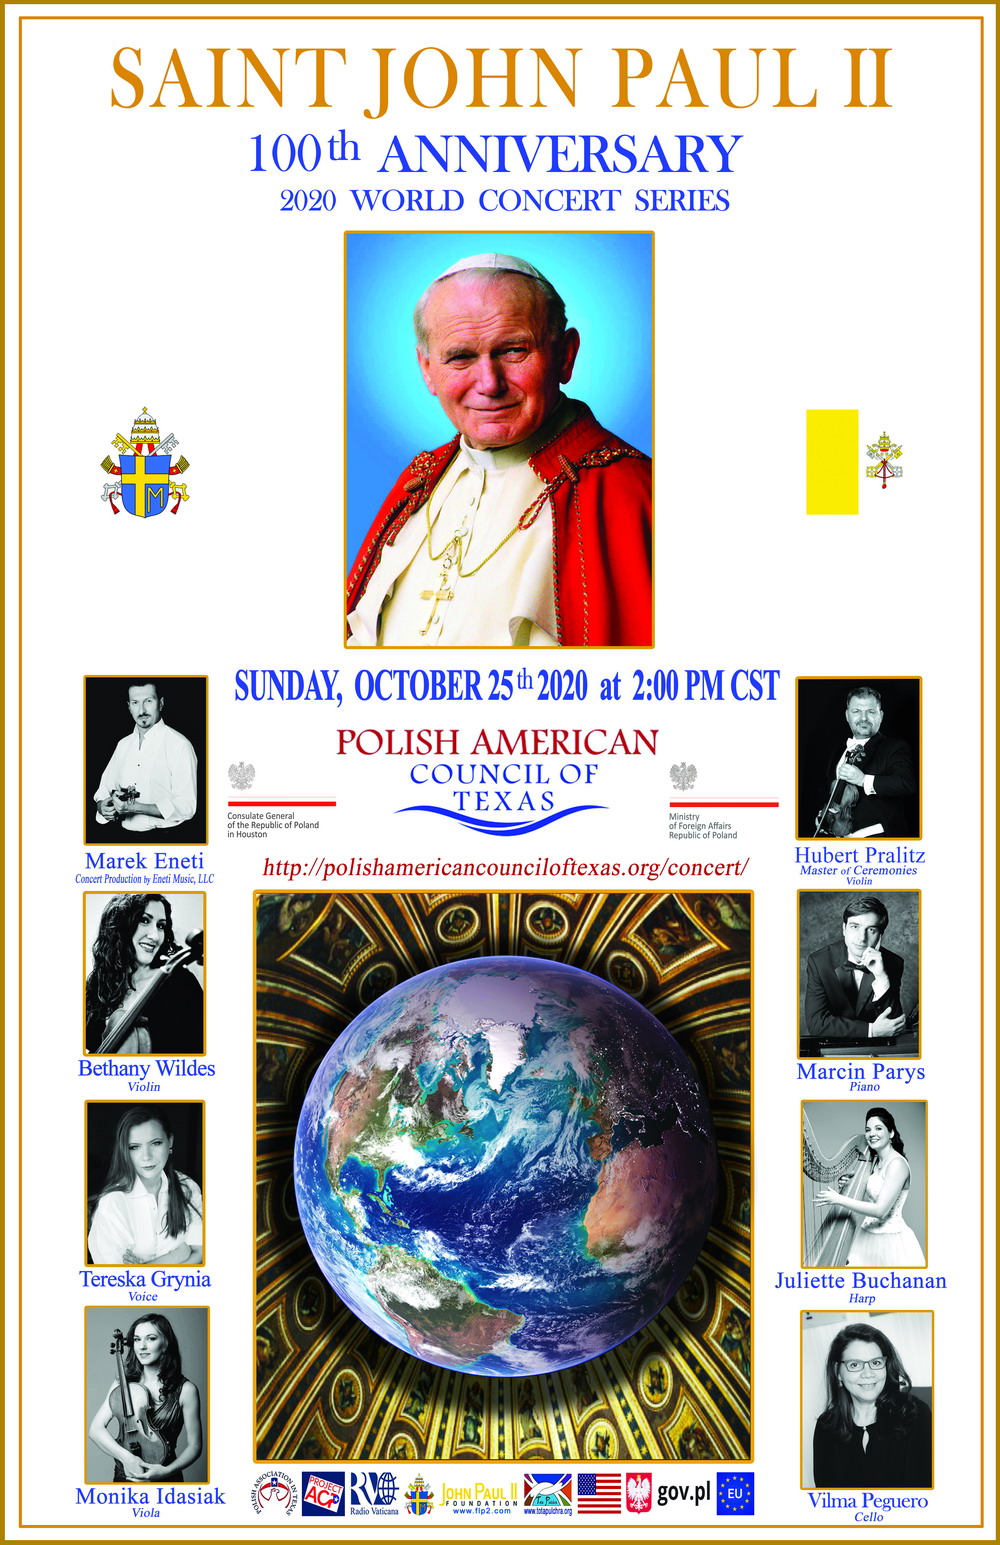 Saint John Paul II 100th Anniversary 2020 World Concert Series